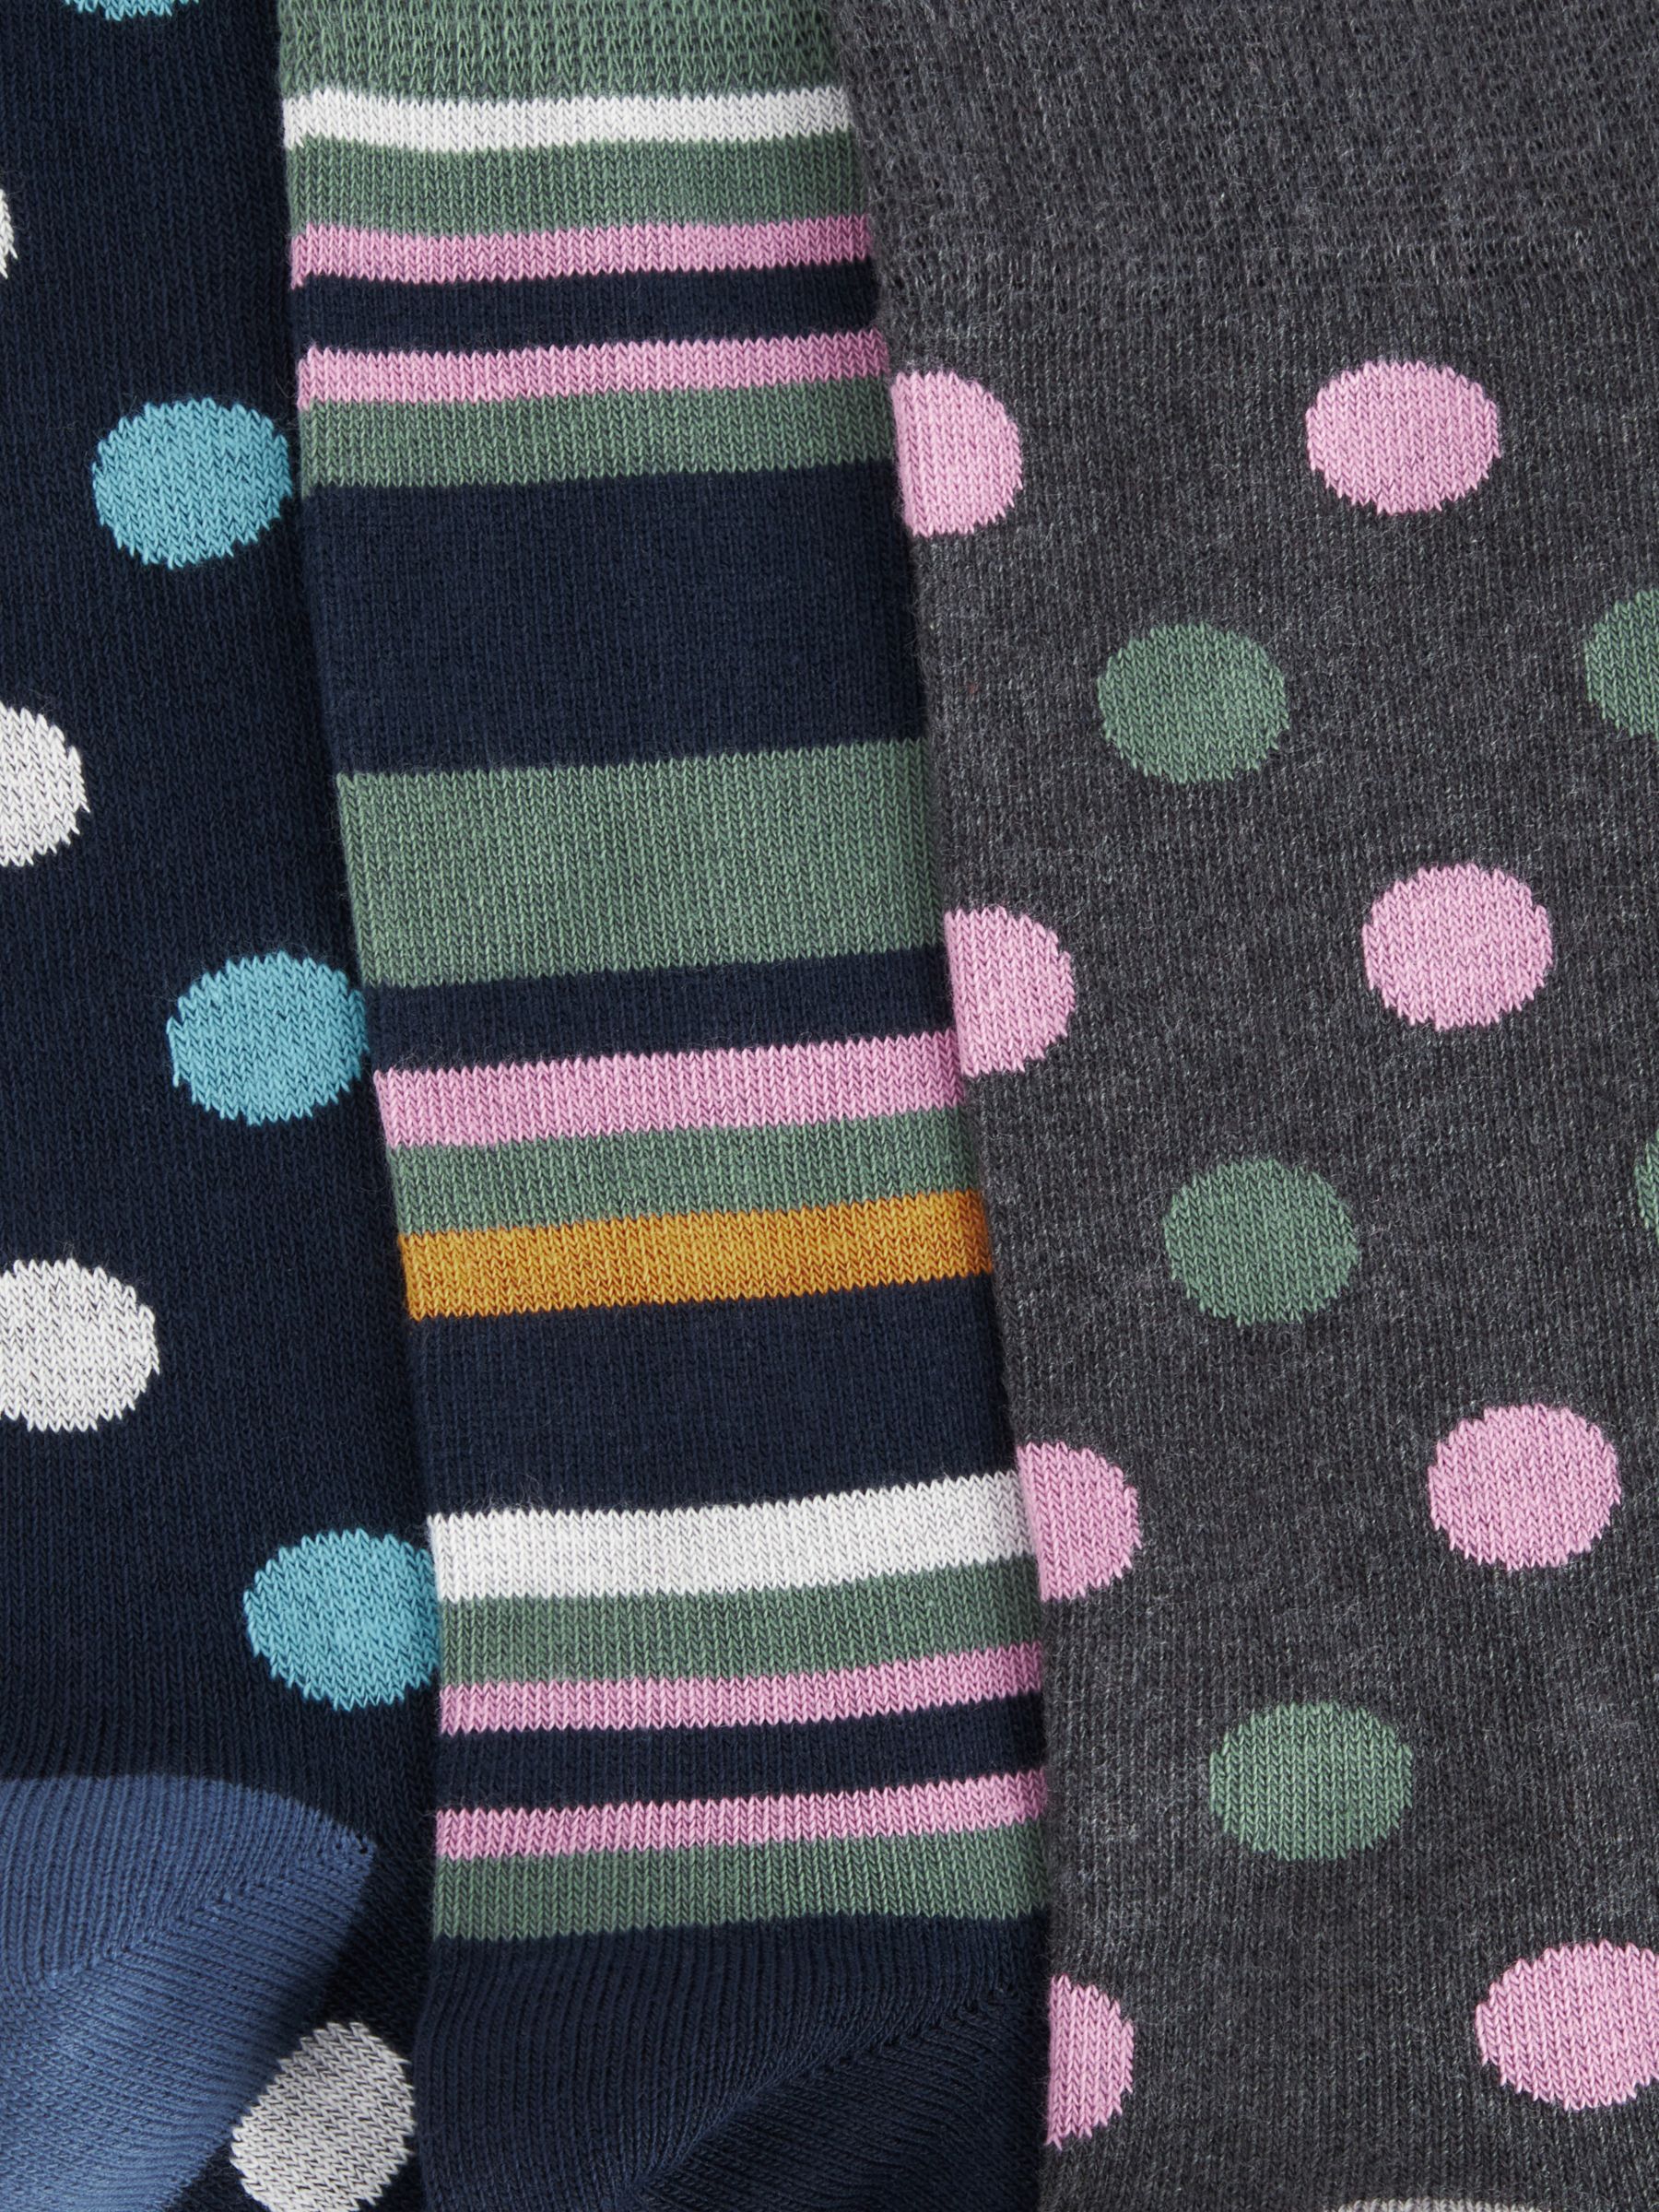 Buy John Lewis Spot & Stripe Socks, Pack of 3, Multi Online at johnlewis.com